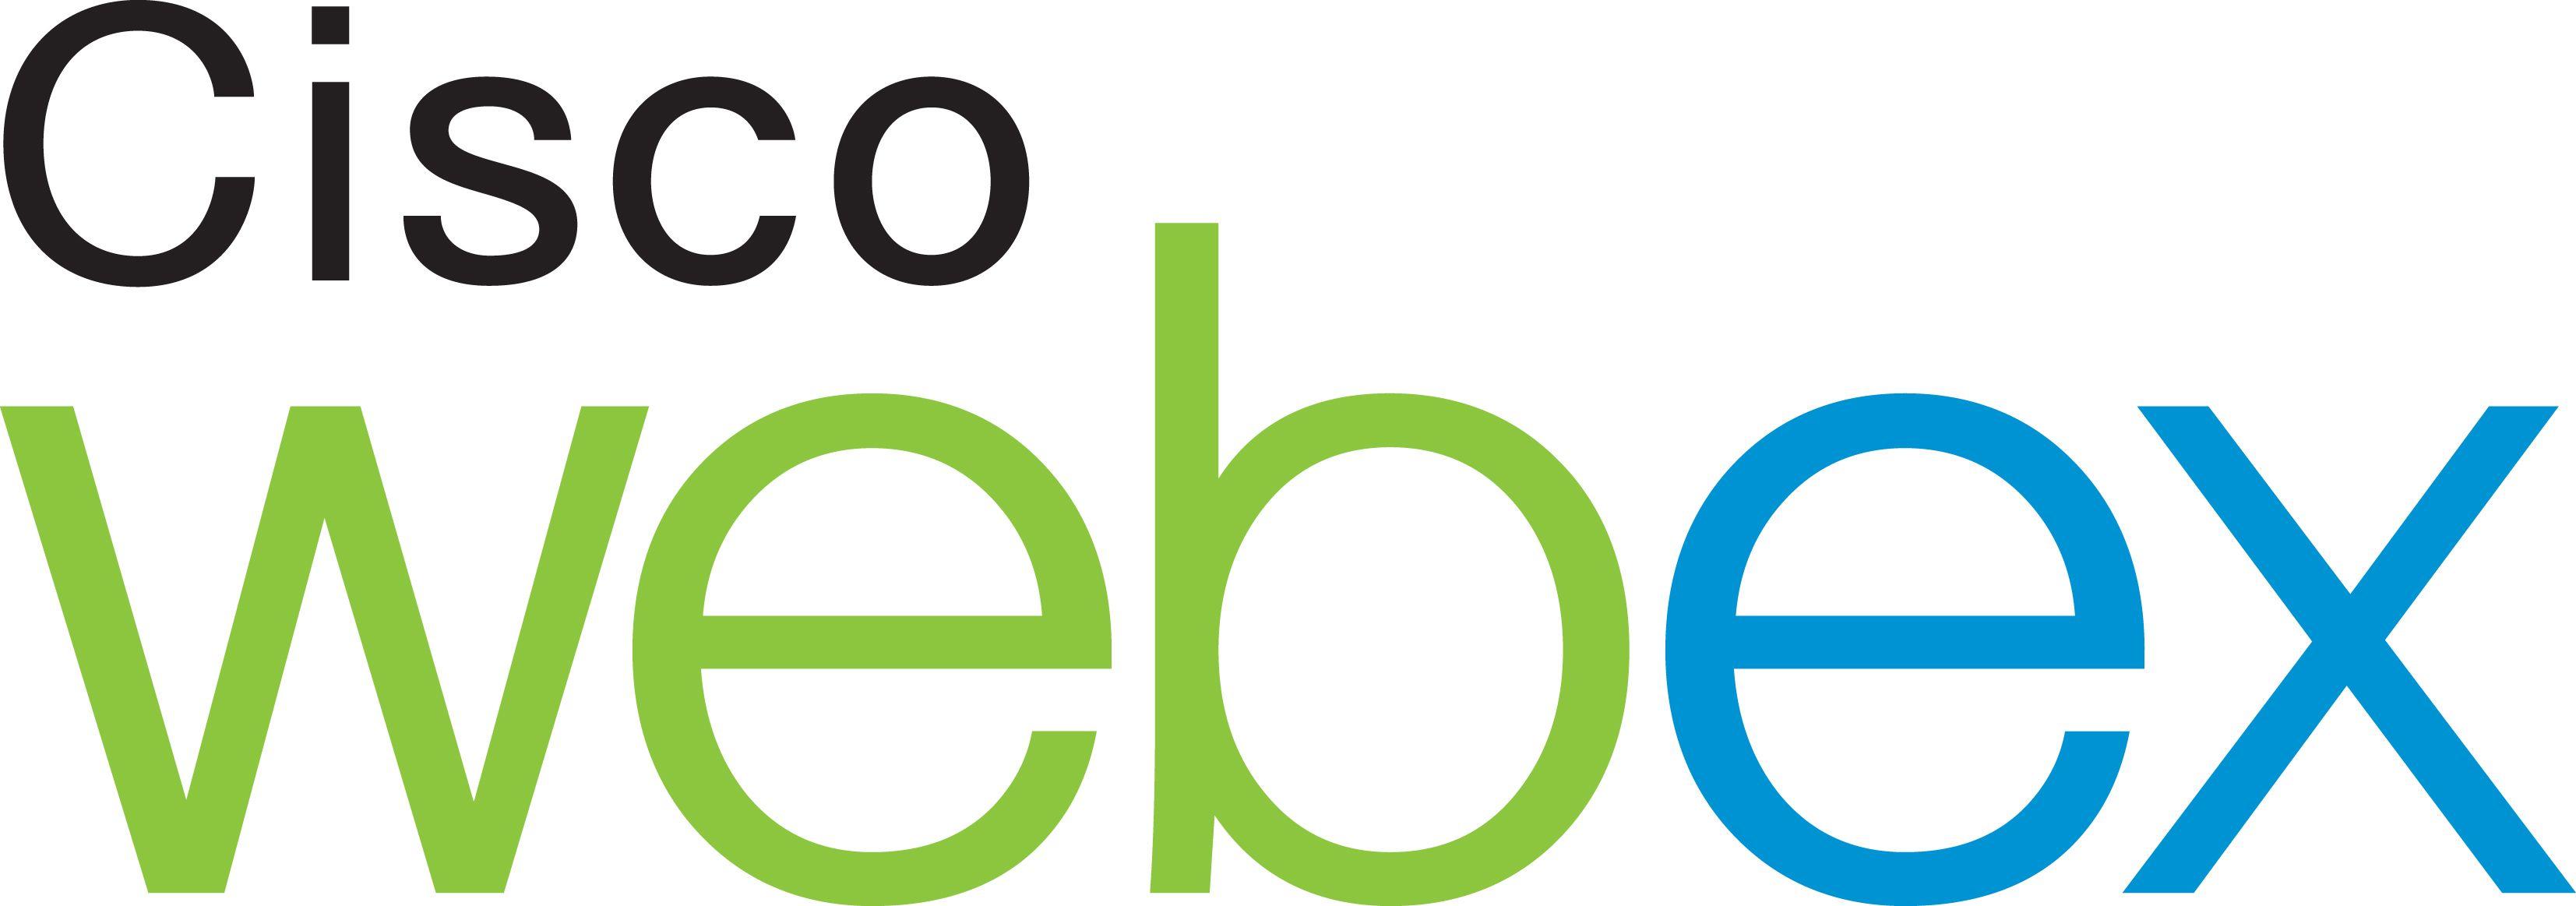 New WebEx Logo - Article - WebEx Help